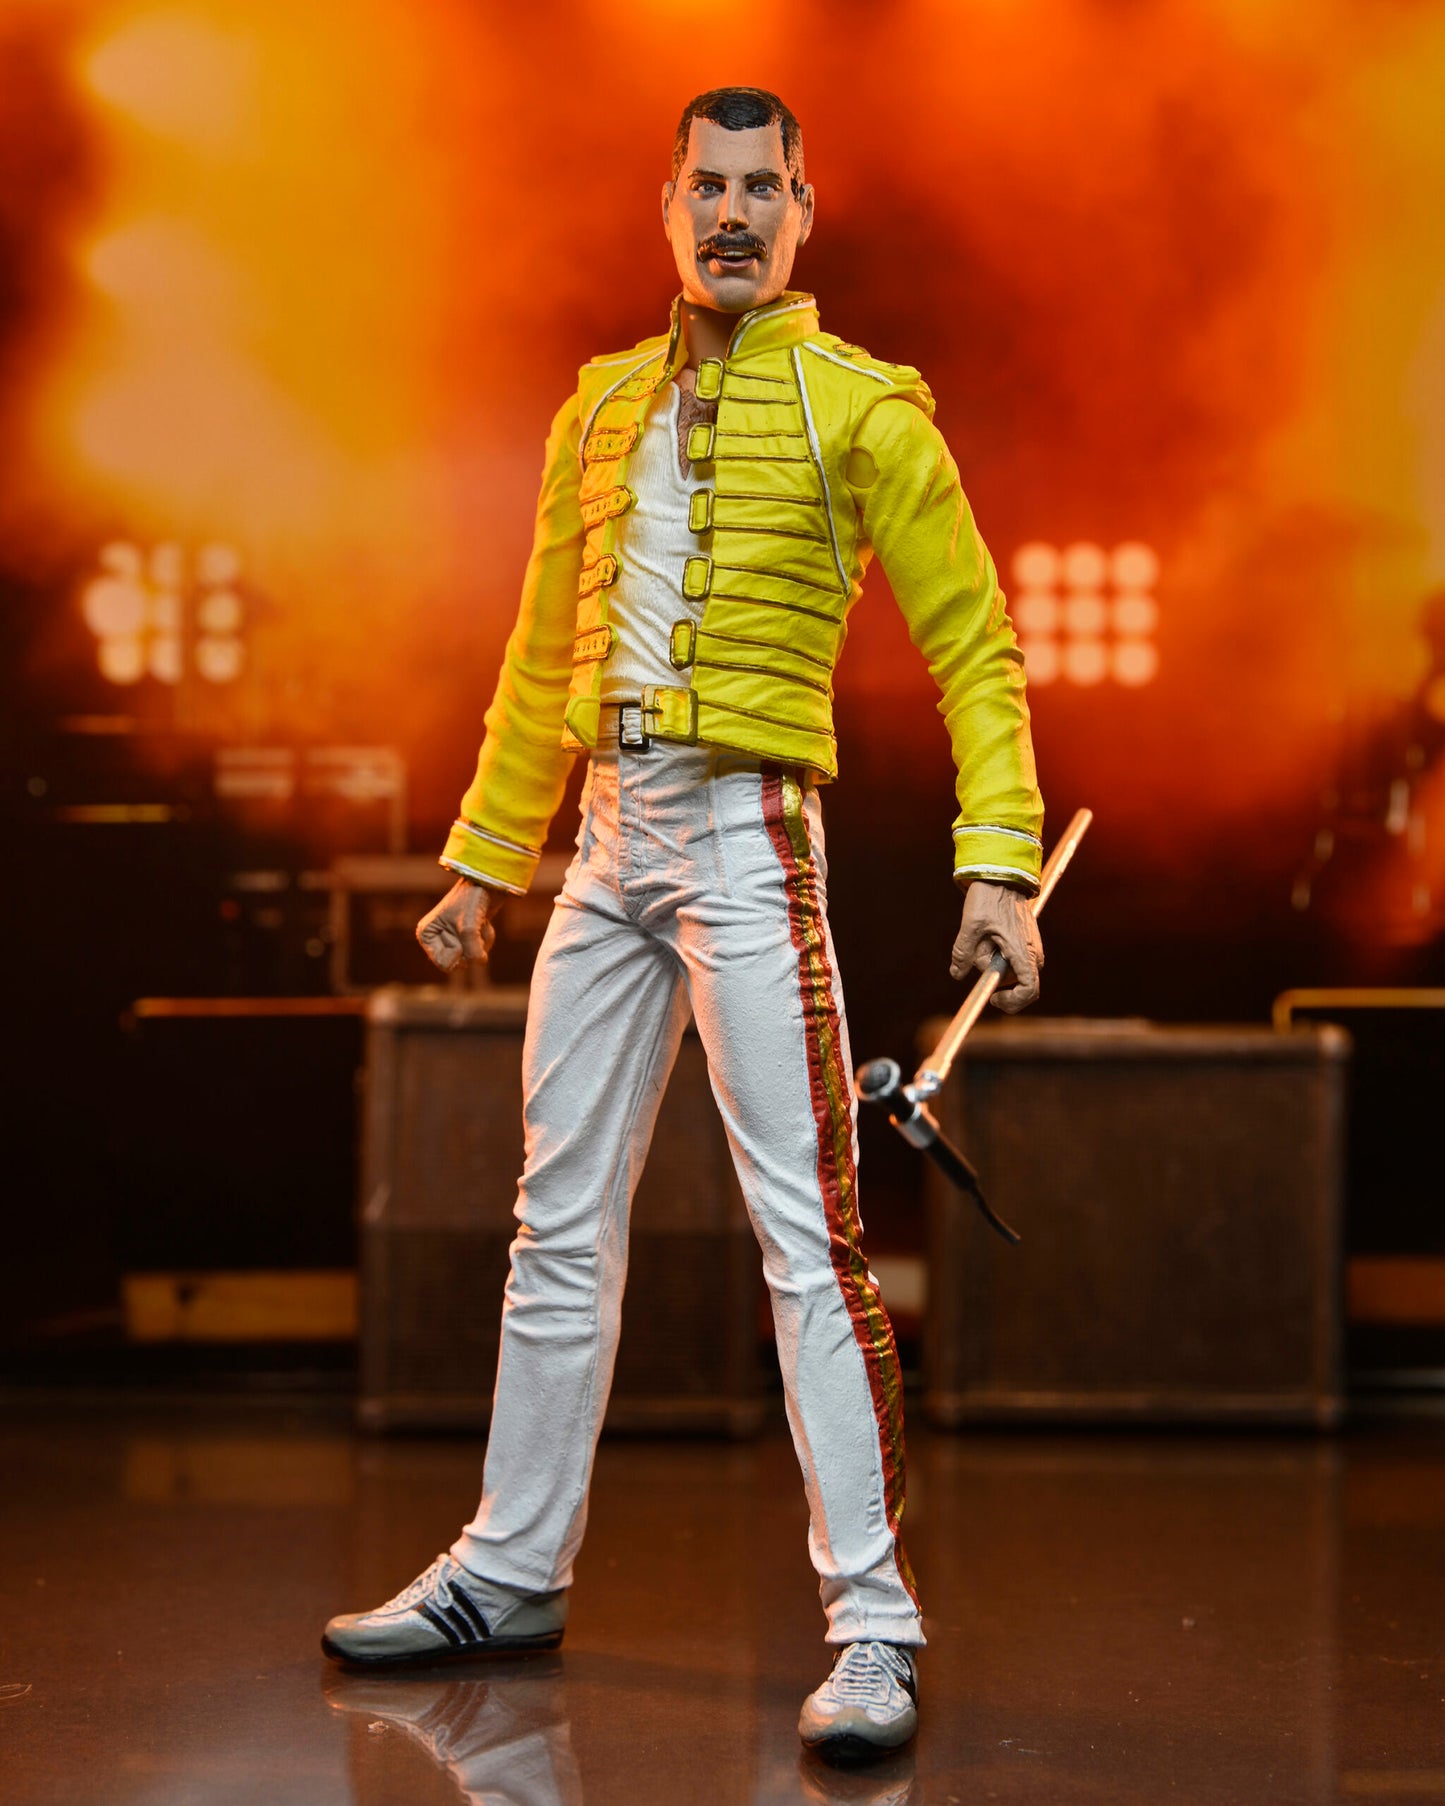 Freddie Mercury 7” Scale Action Figure – Yellow Jacket